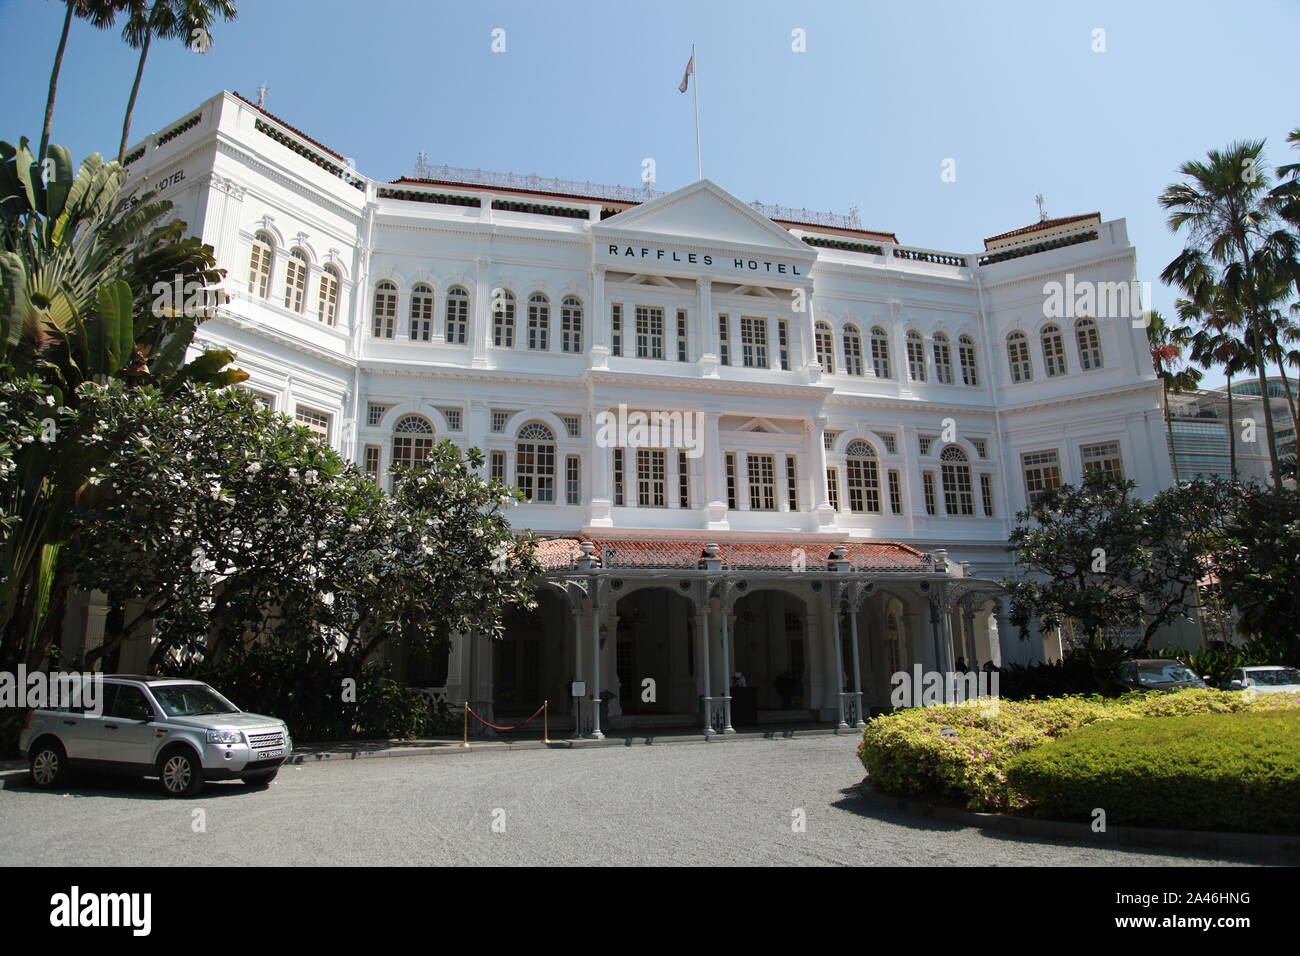 raffles hotel singapore Stock Photo